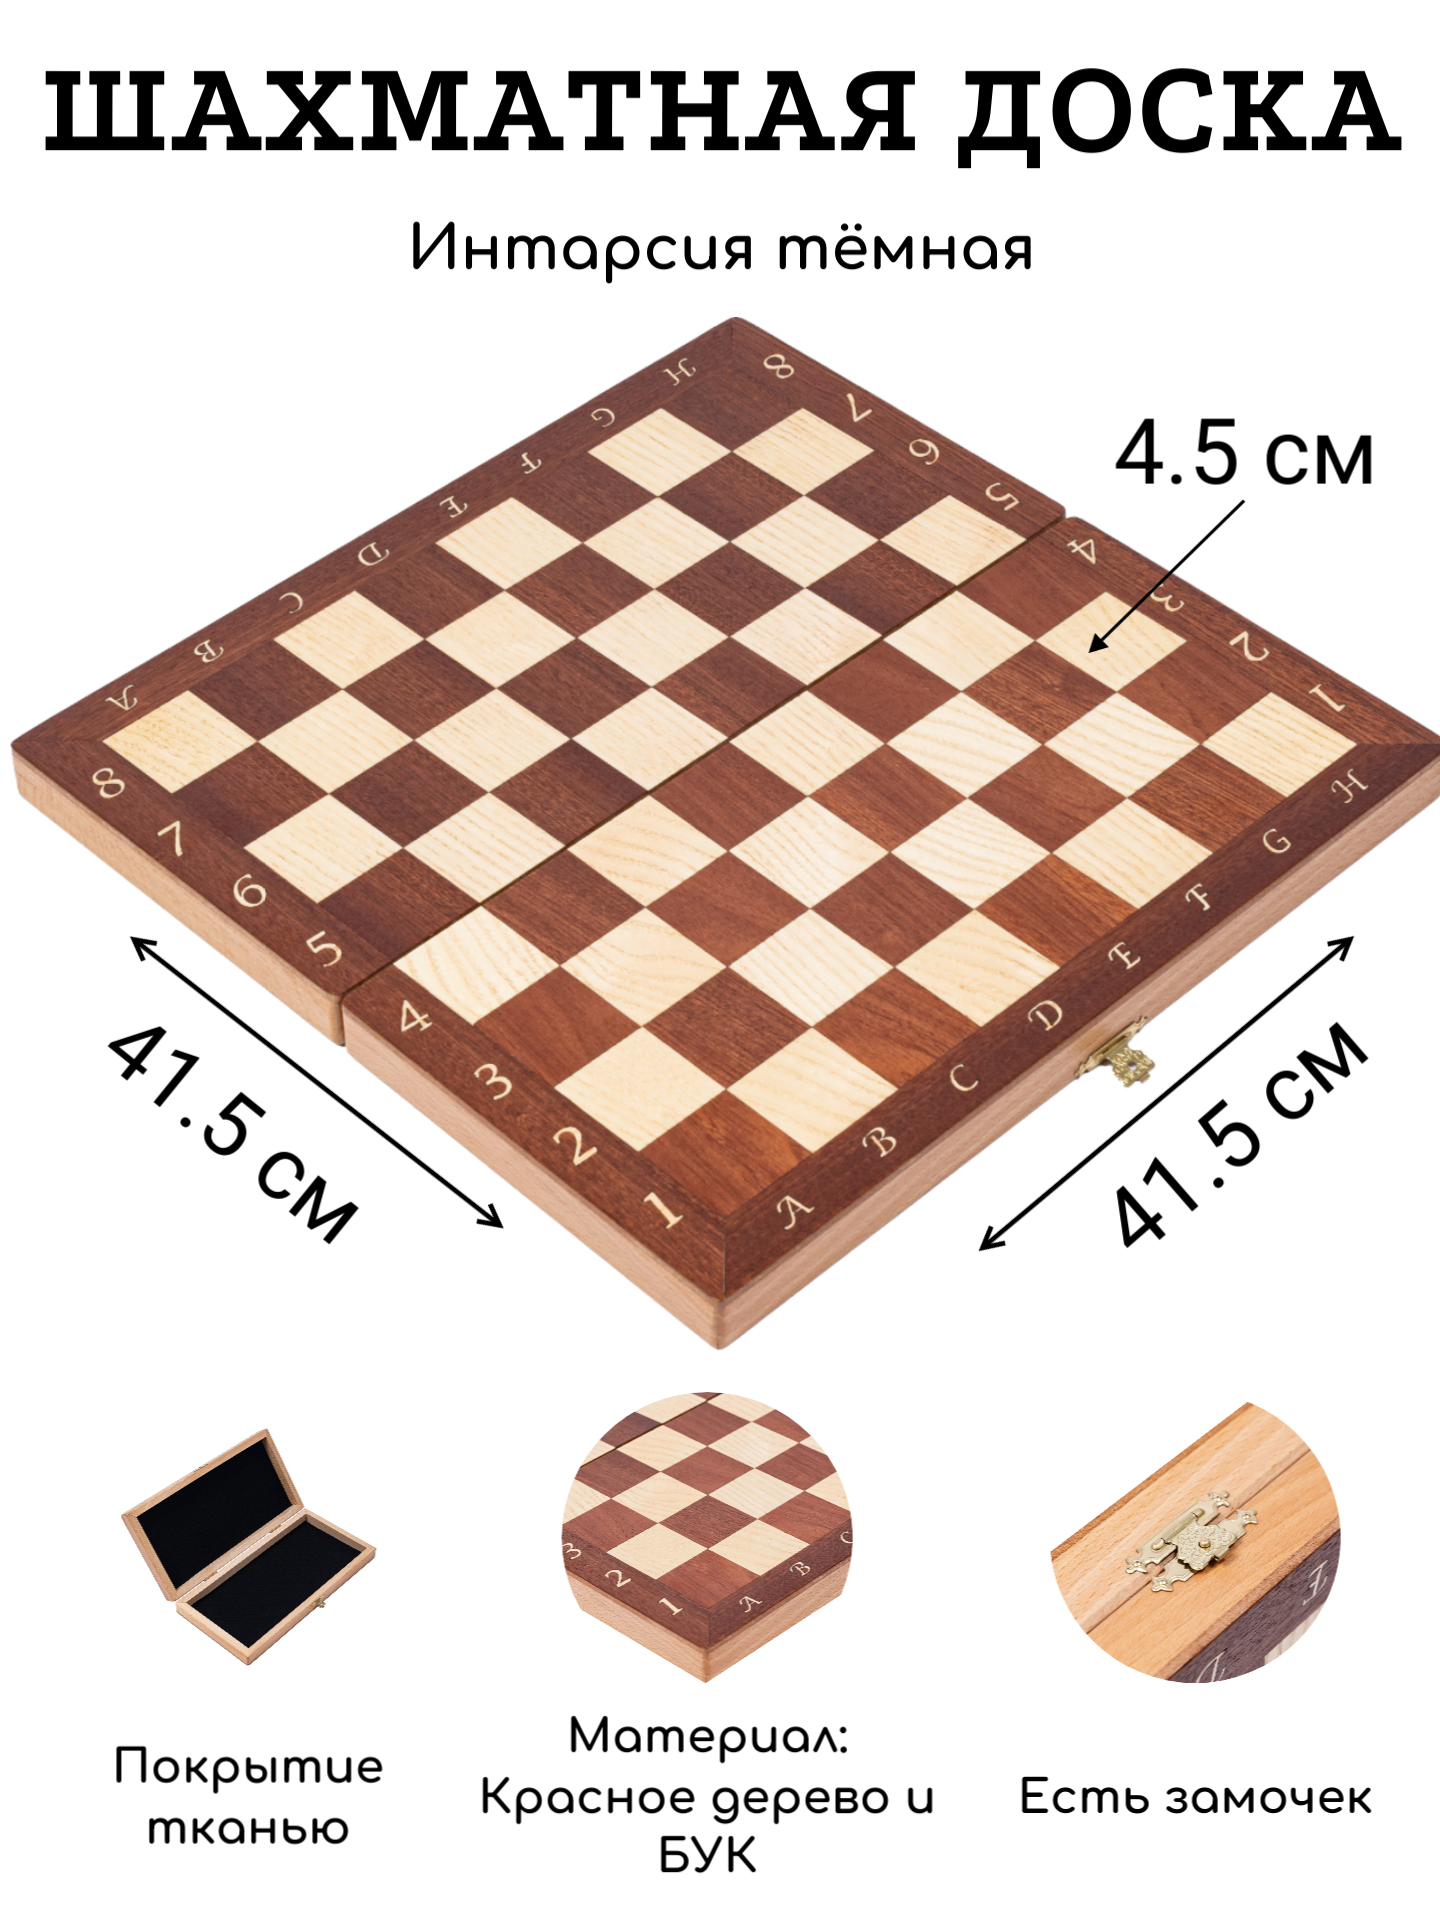 Шахматная доска без фигур Lavochkashop Турнирная 41 5 см интарсия stav041 великая шахматная доска